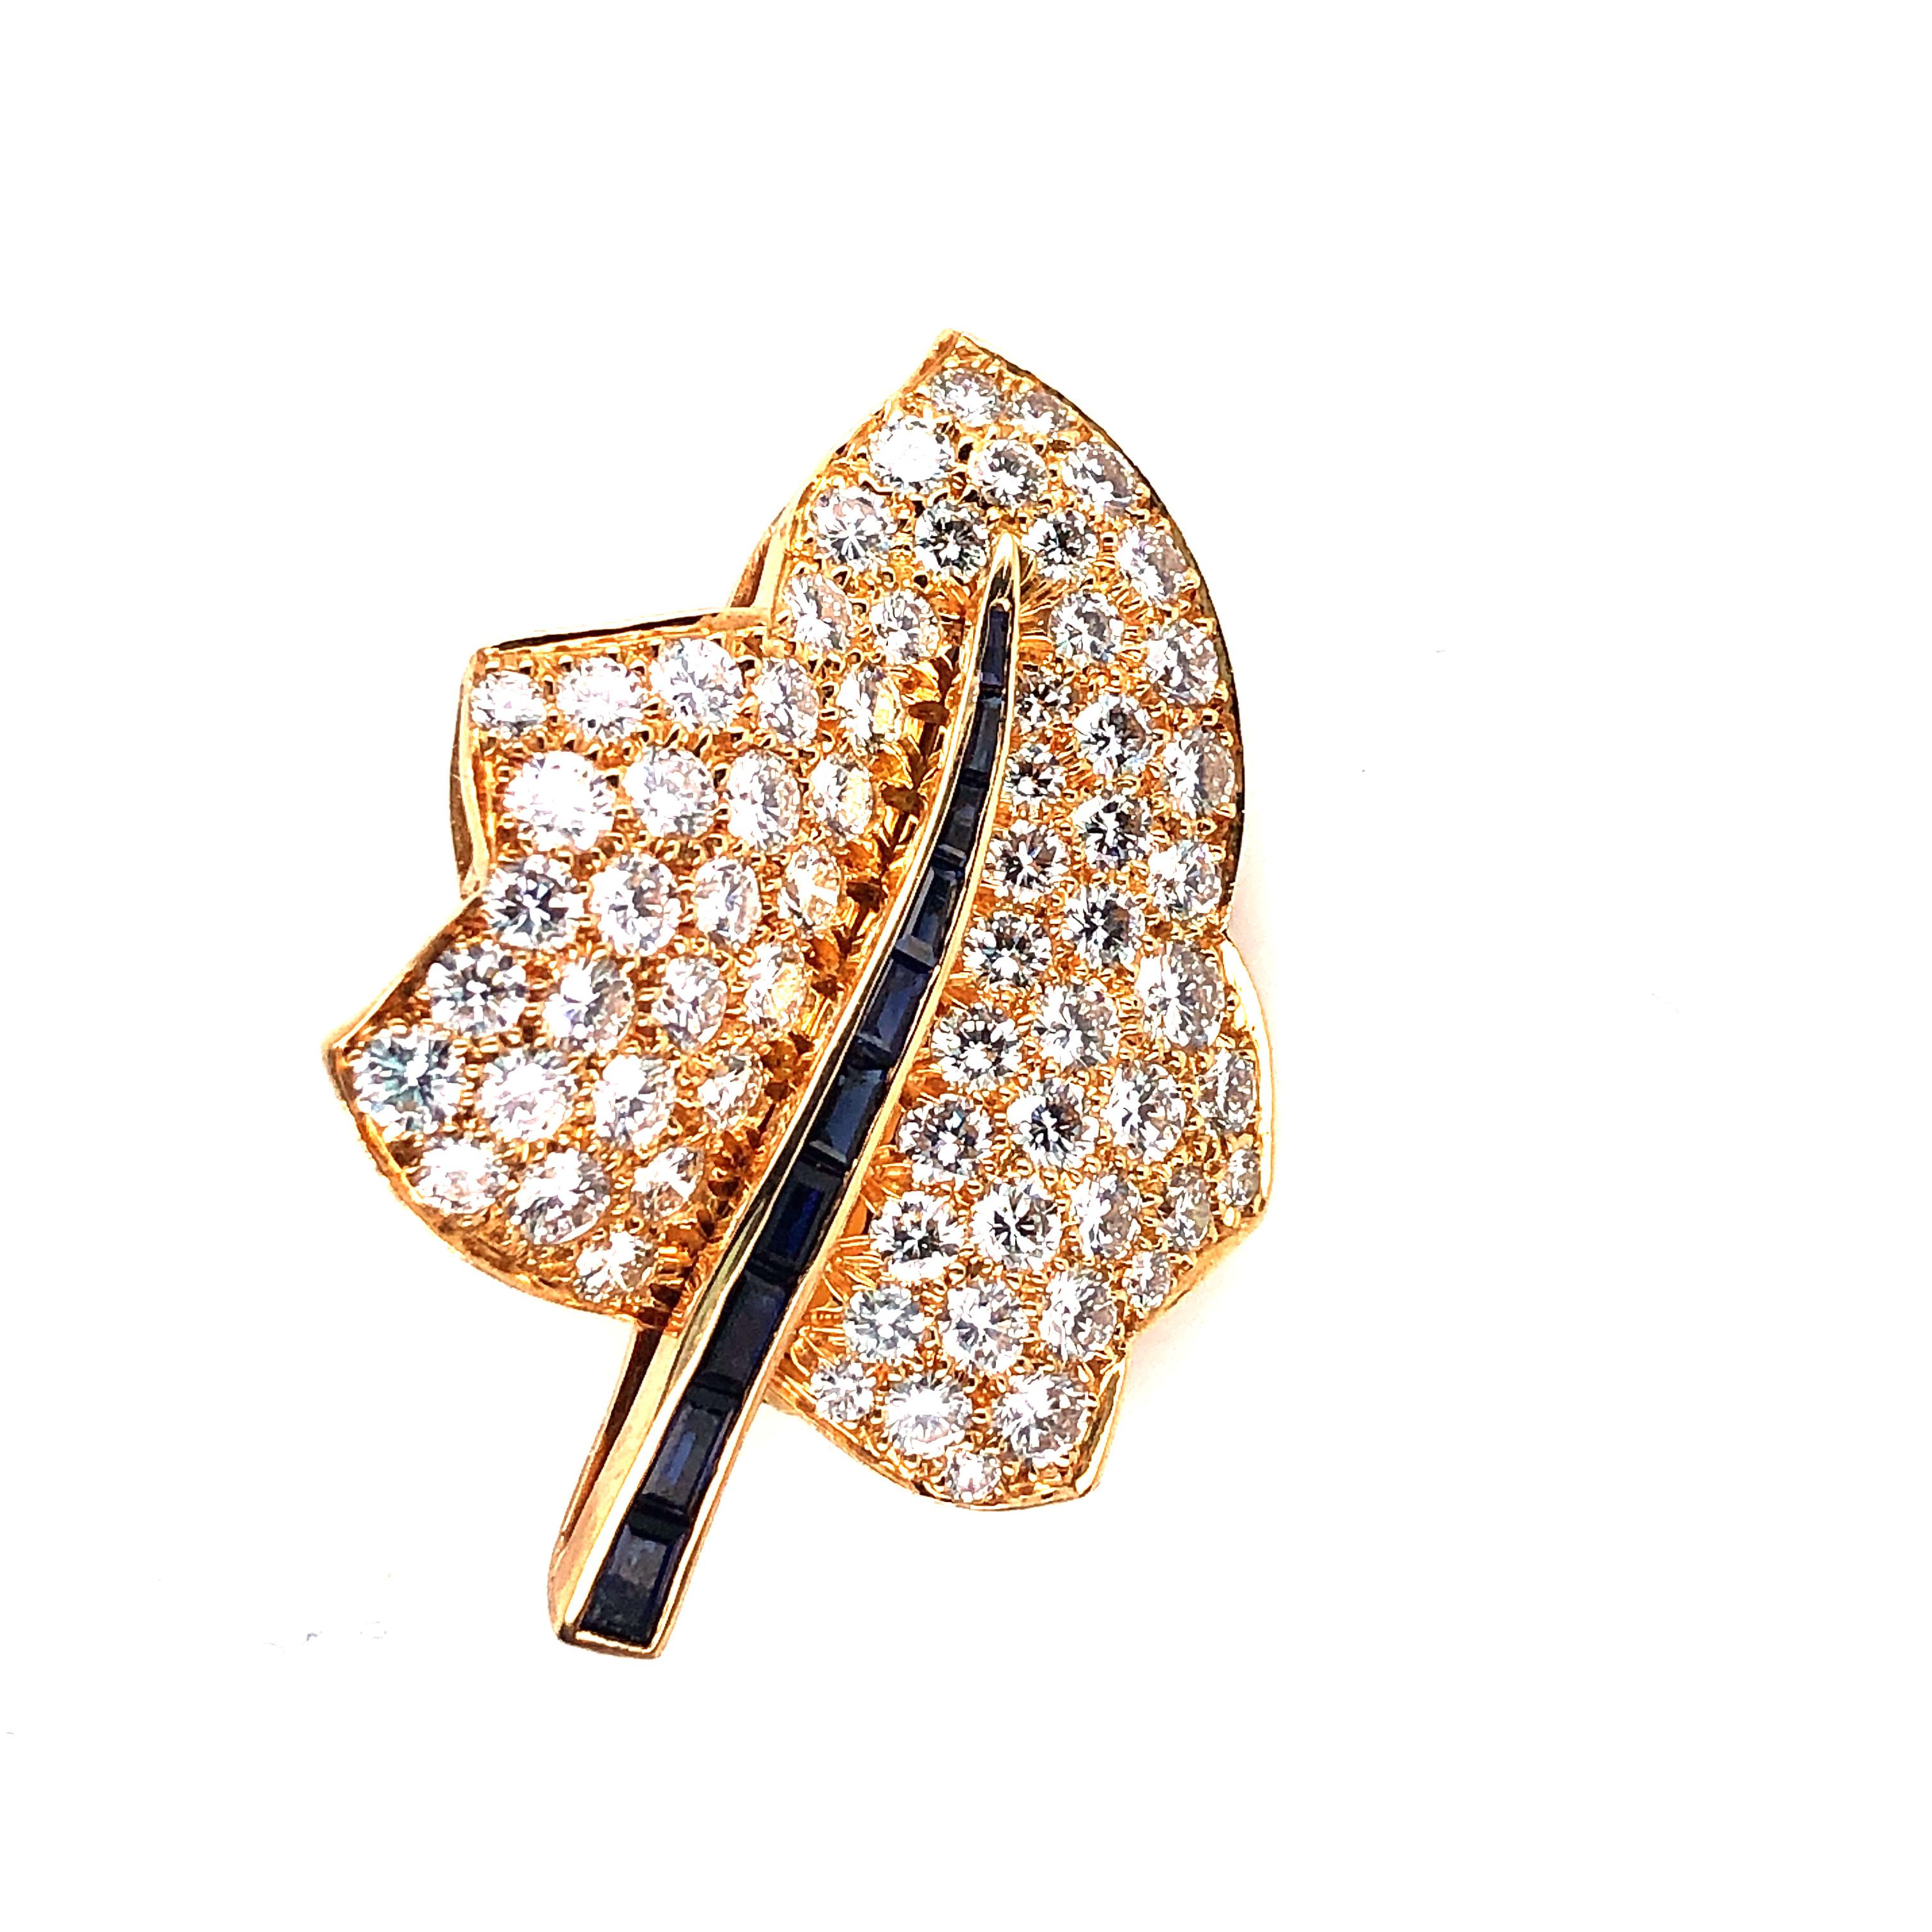 Petite broche Oscar Heyman en forme de feuille d'érable en or pavé de diamants en vente 2